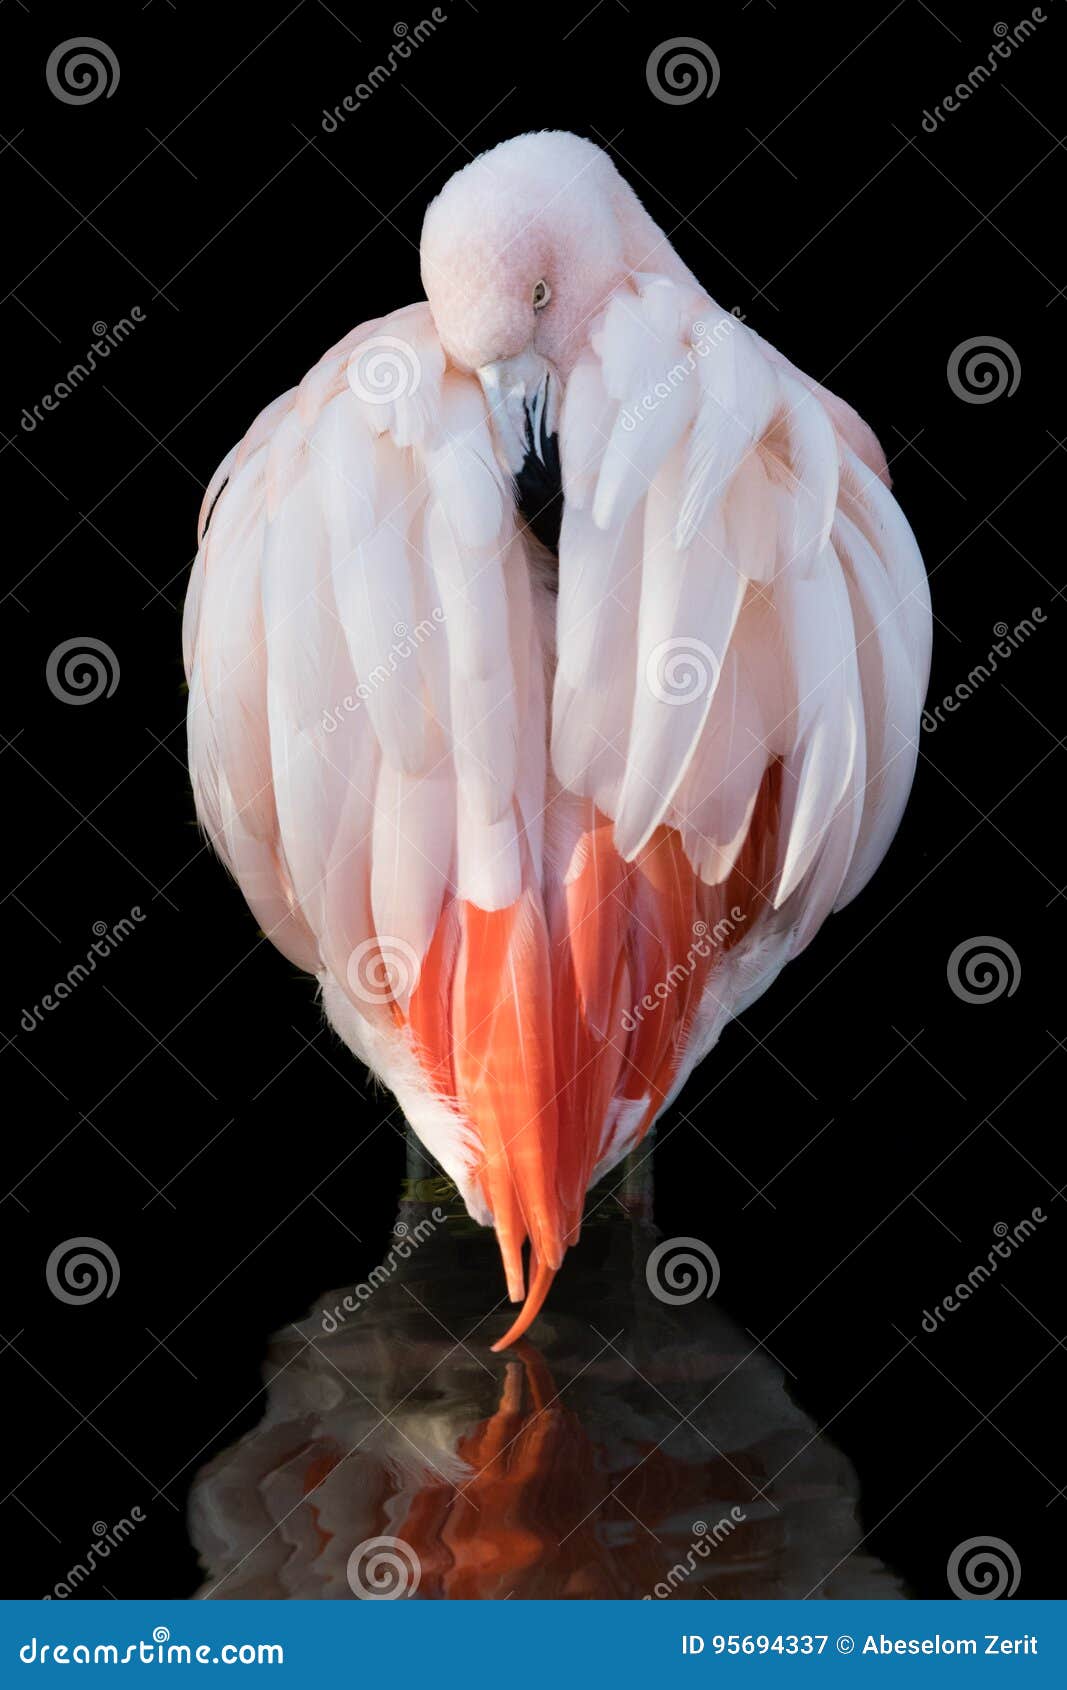 chilean flamingo ix